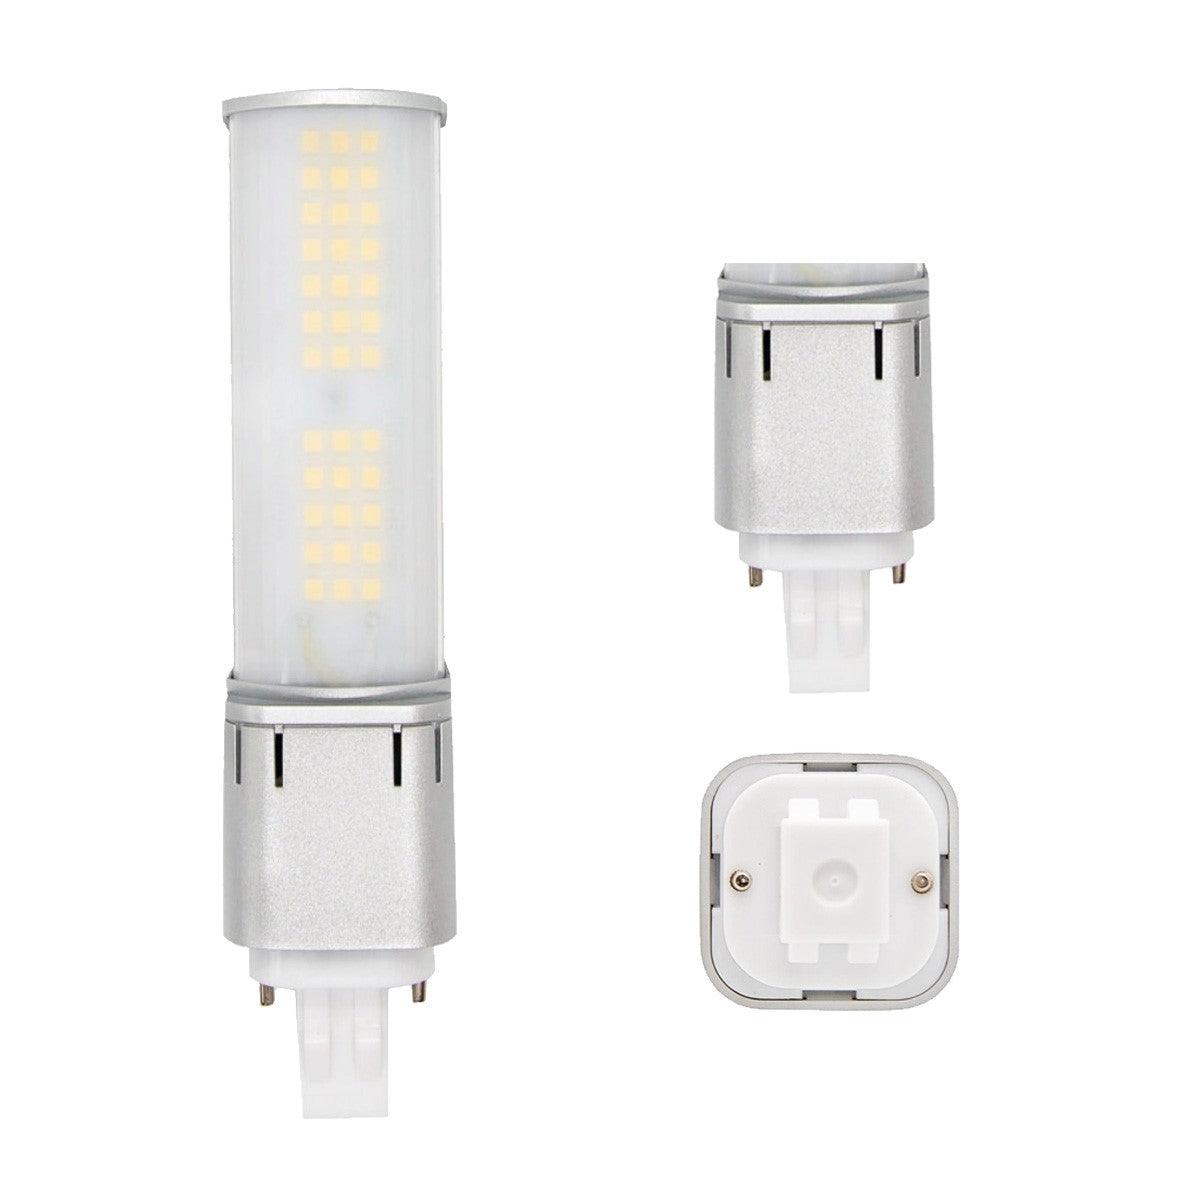 2 pin PL LED Bulb, 7 Watt 820 Lumens, 2700K, Horizontal, Replaces 13W CFL, GX23 Base-2, Direct Or Bypass - Bees Lighting